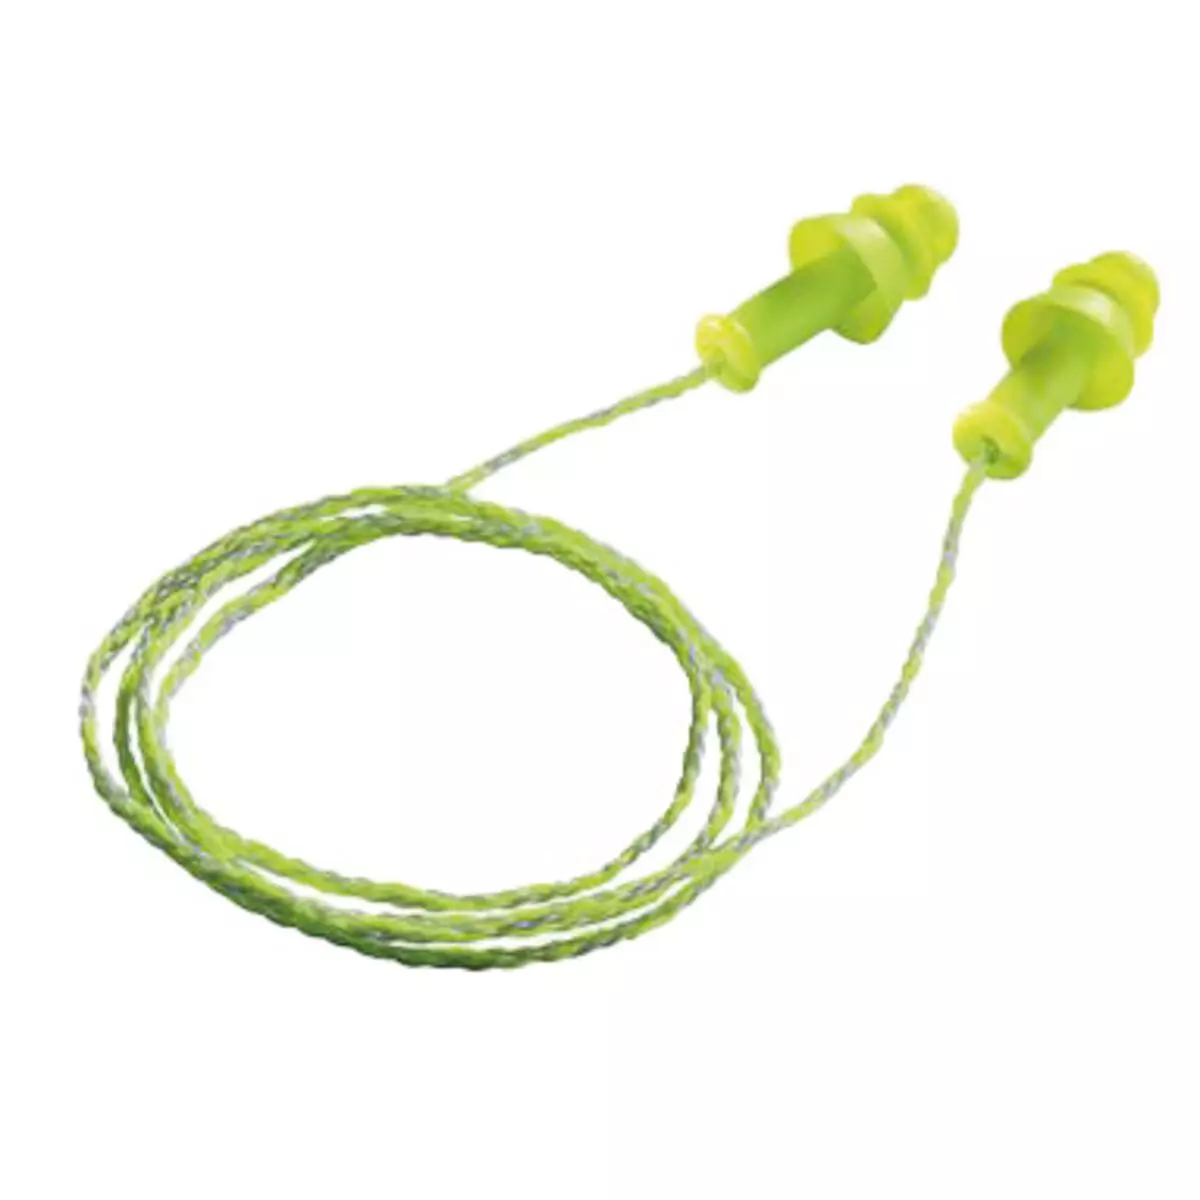 uvex whisper+ earplugs with cord